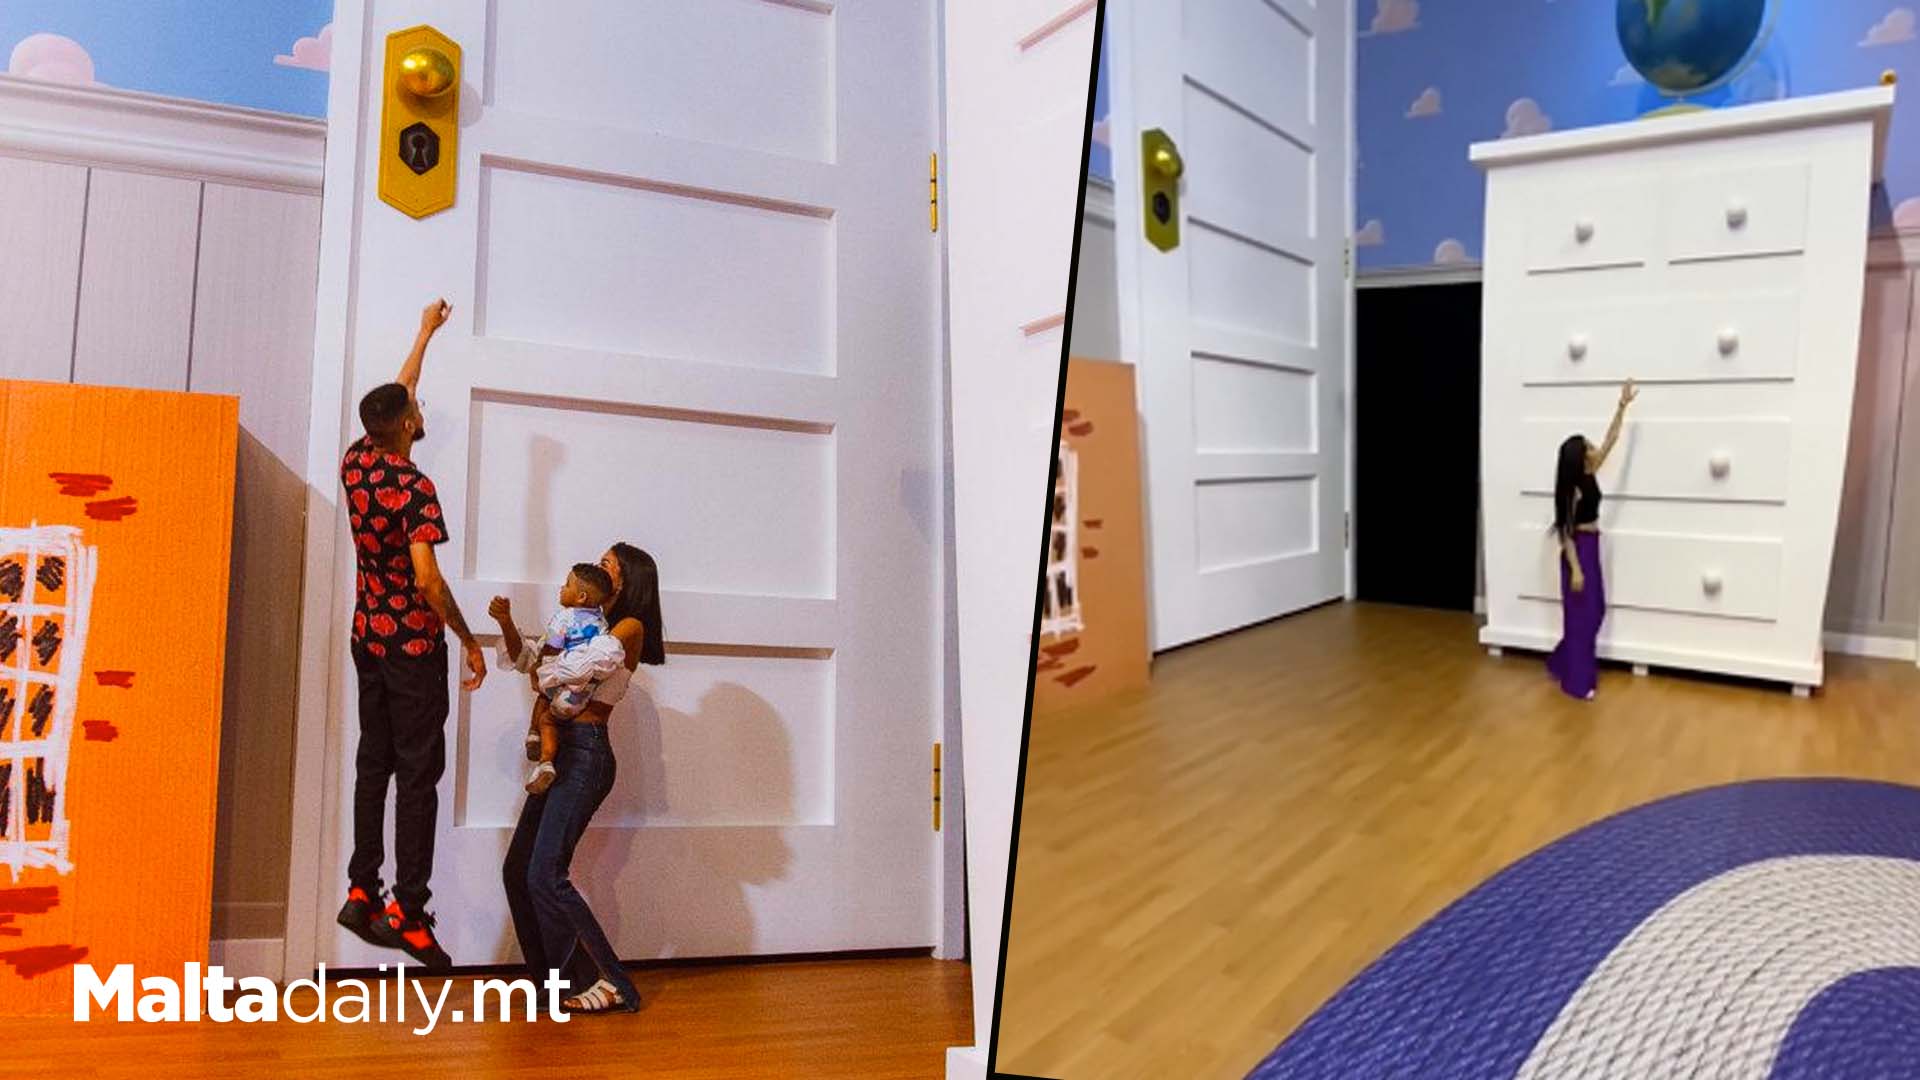 Pixar World Madrid’s Toy Story Room Goes Viral On TikTok